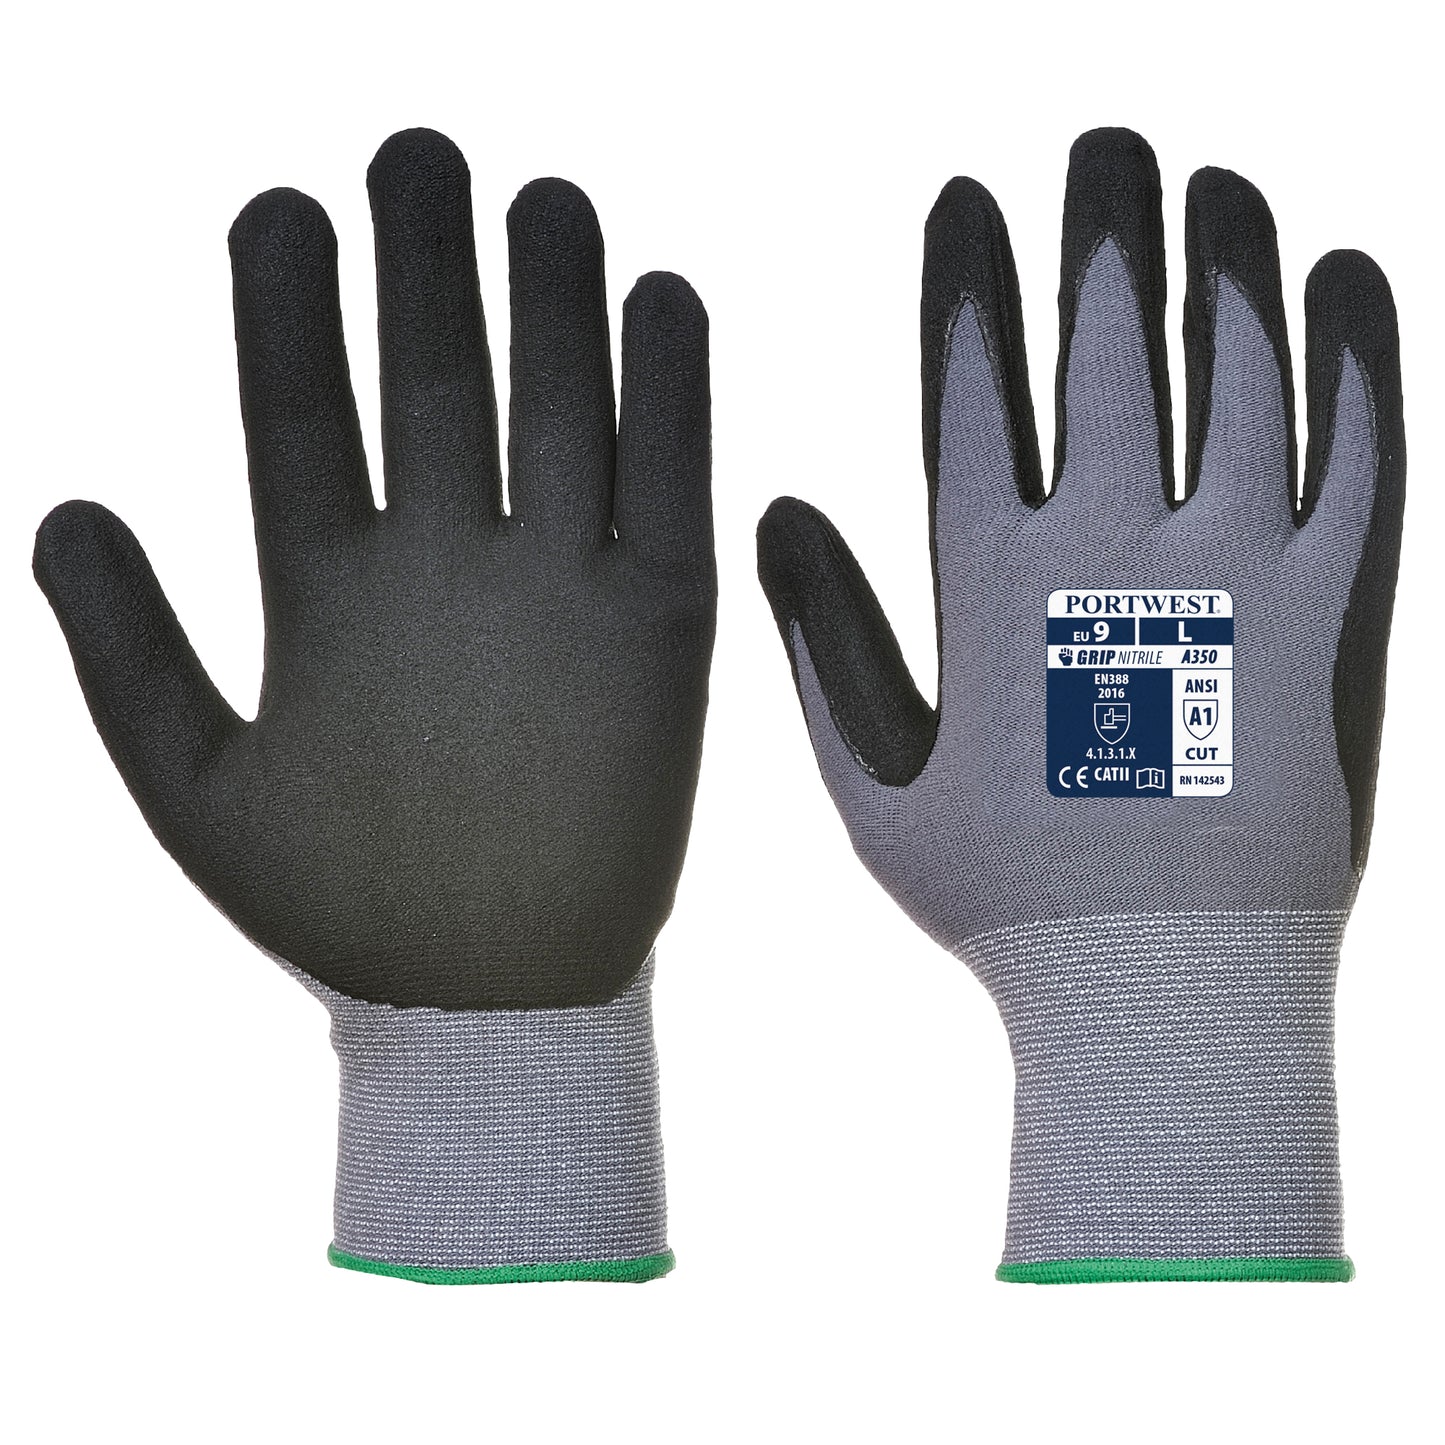 Dermiflex Glove Grey/Black - A350 Palm & Back